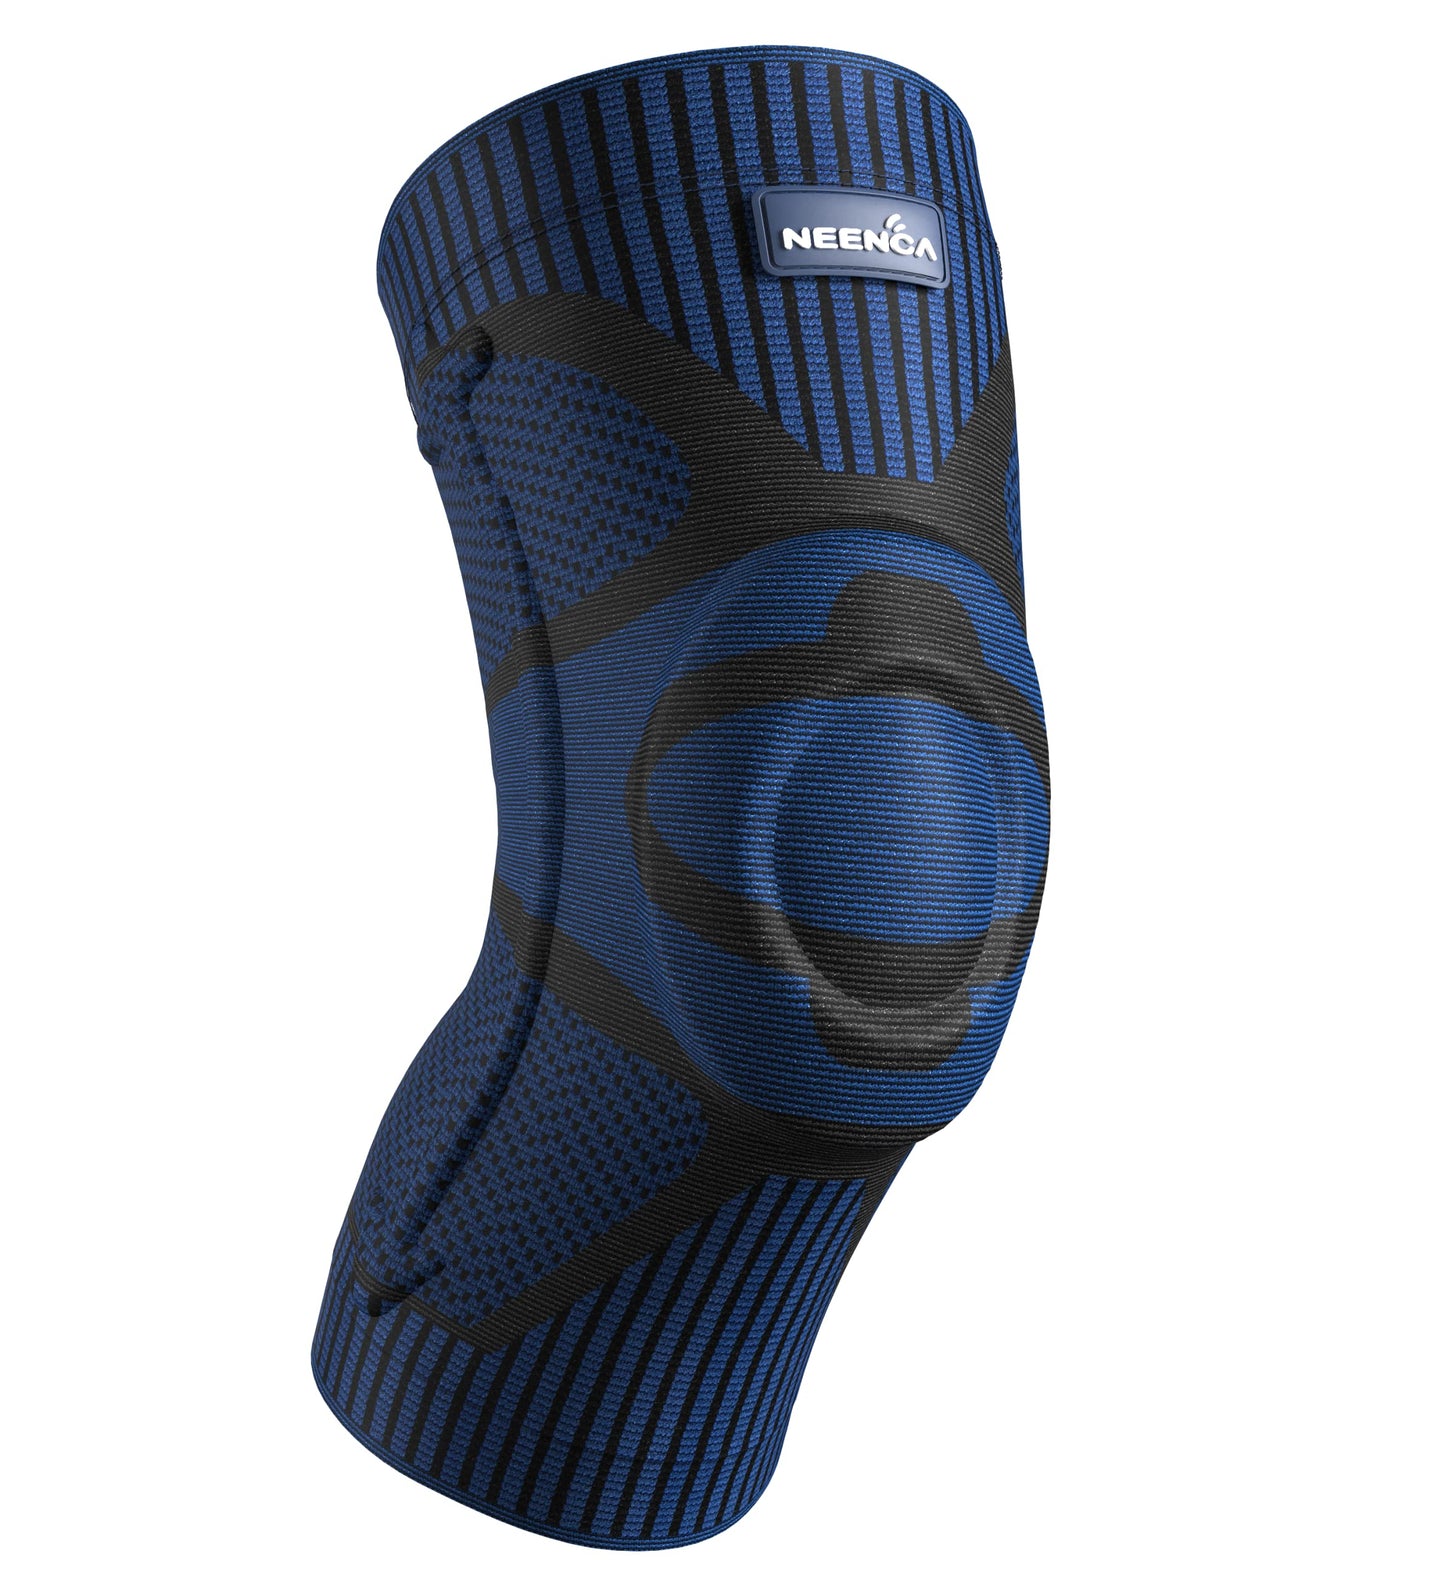 NEENCA Knee Brace Compression Knee Support Sleeve Sz XL - Opticdeals